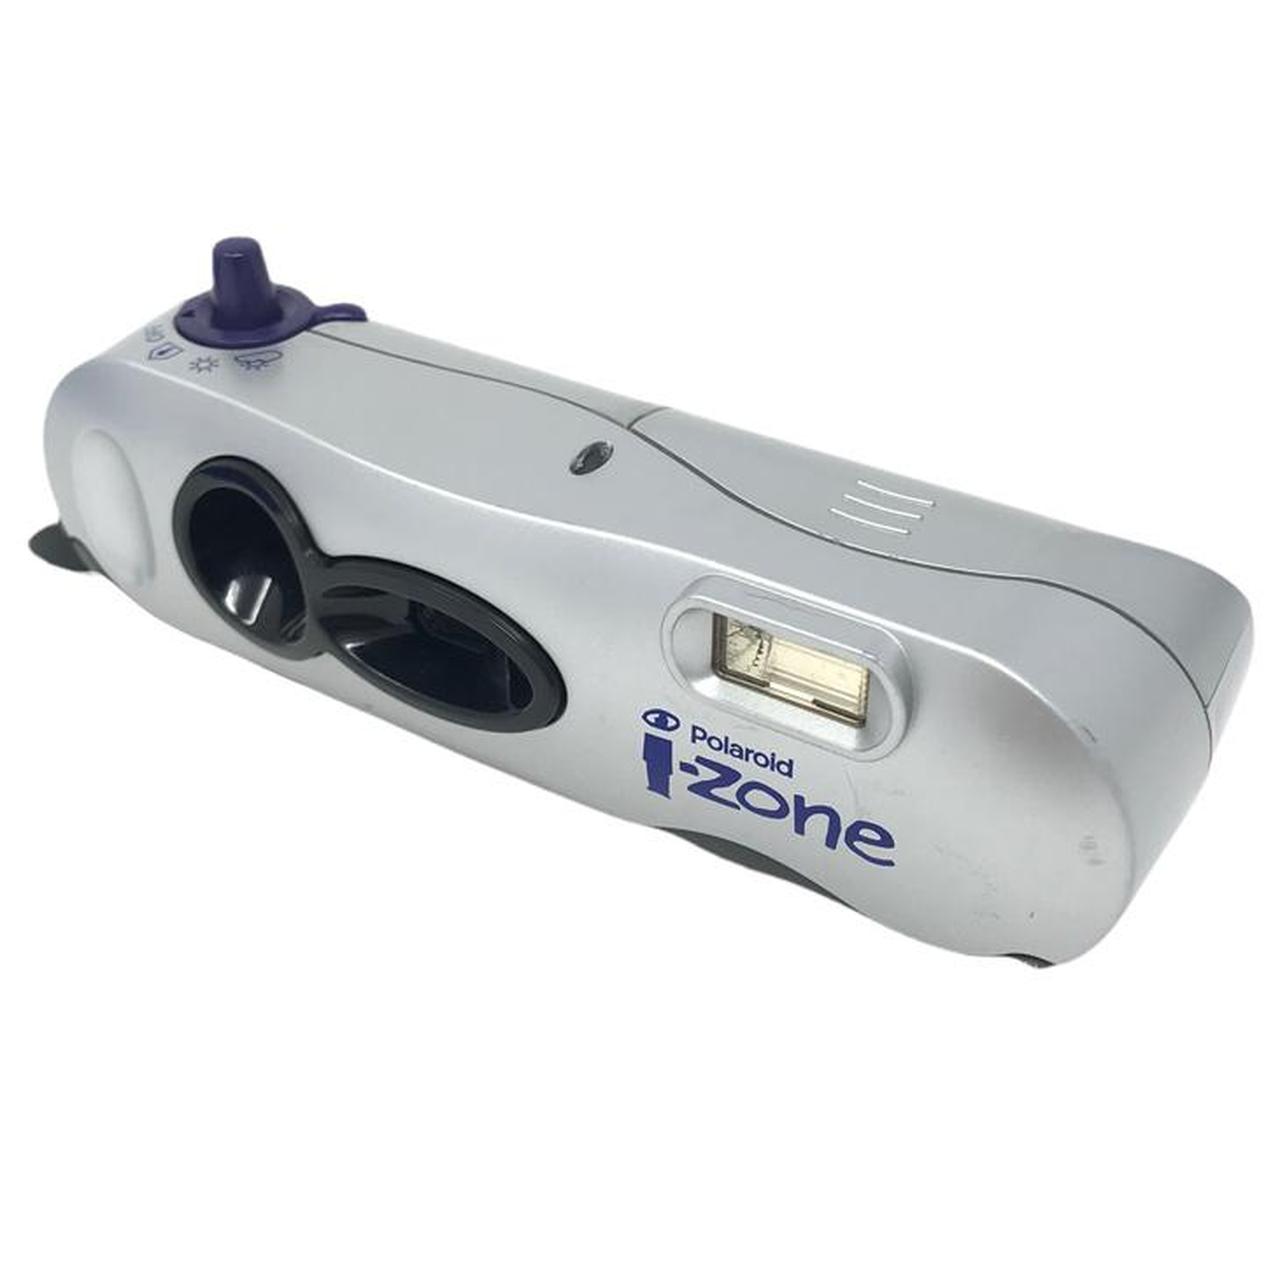 Product Image 2 - Polaroid i-Zone Instant Film Camera

Comes